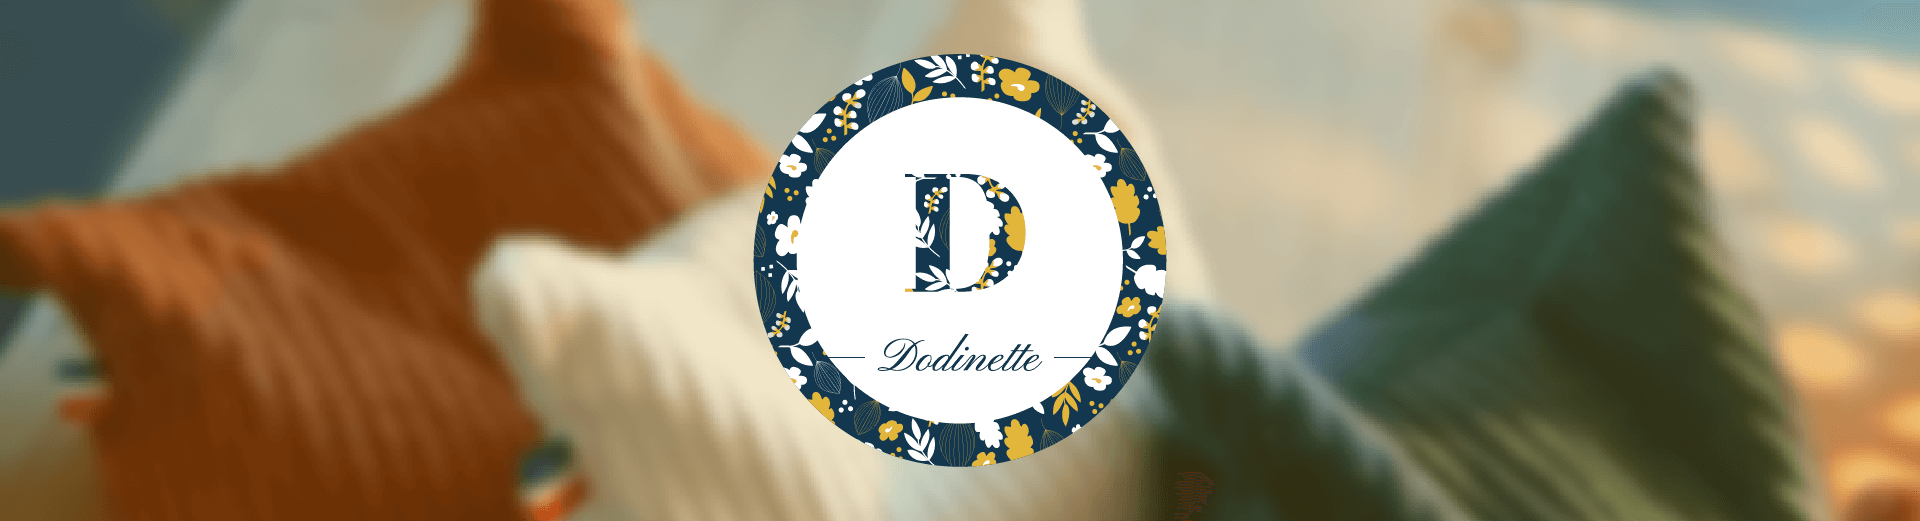 dodinette créations artisanales header